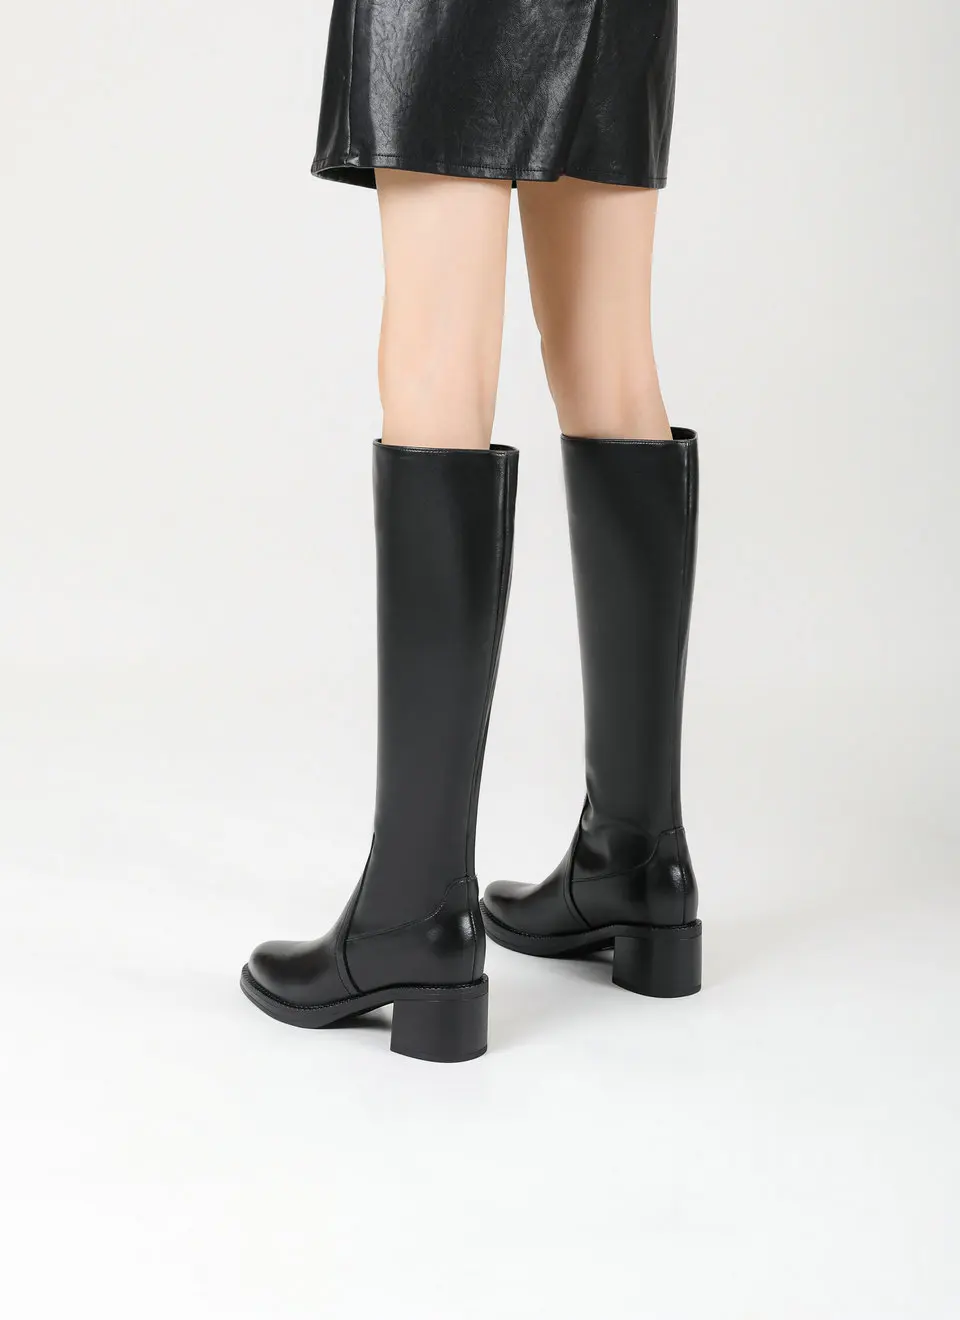 QUTAA-2020-Women-Over-The-Knee-High-Boots-Sexy-Elegant-Winter-Shoes-Square-High-Heel-Round.jpg_640x640.jpg